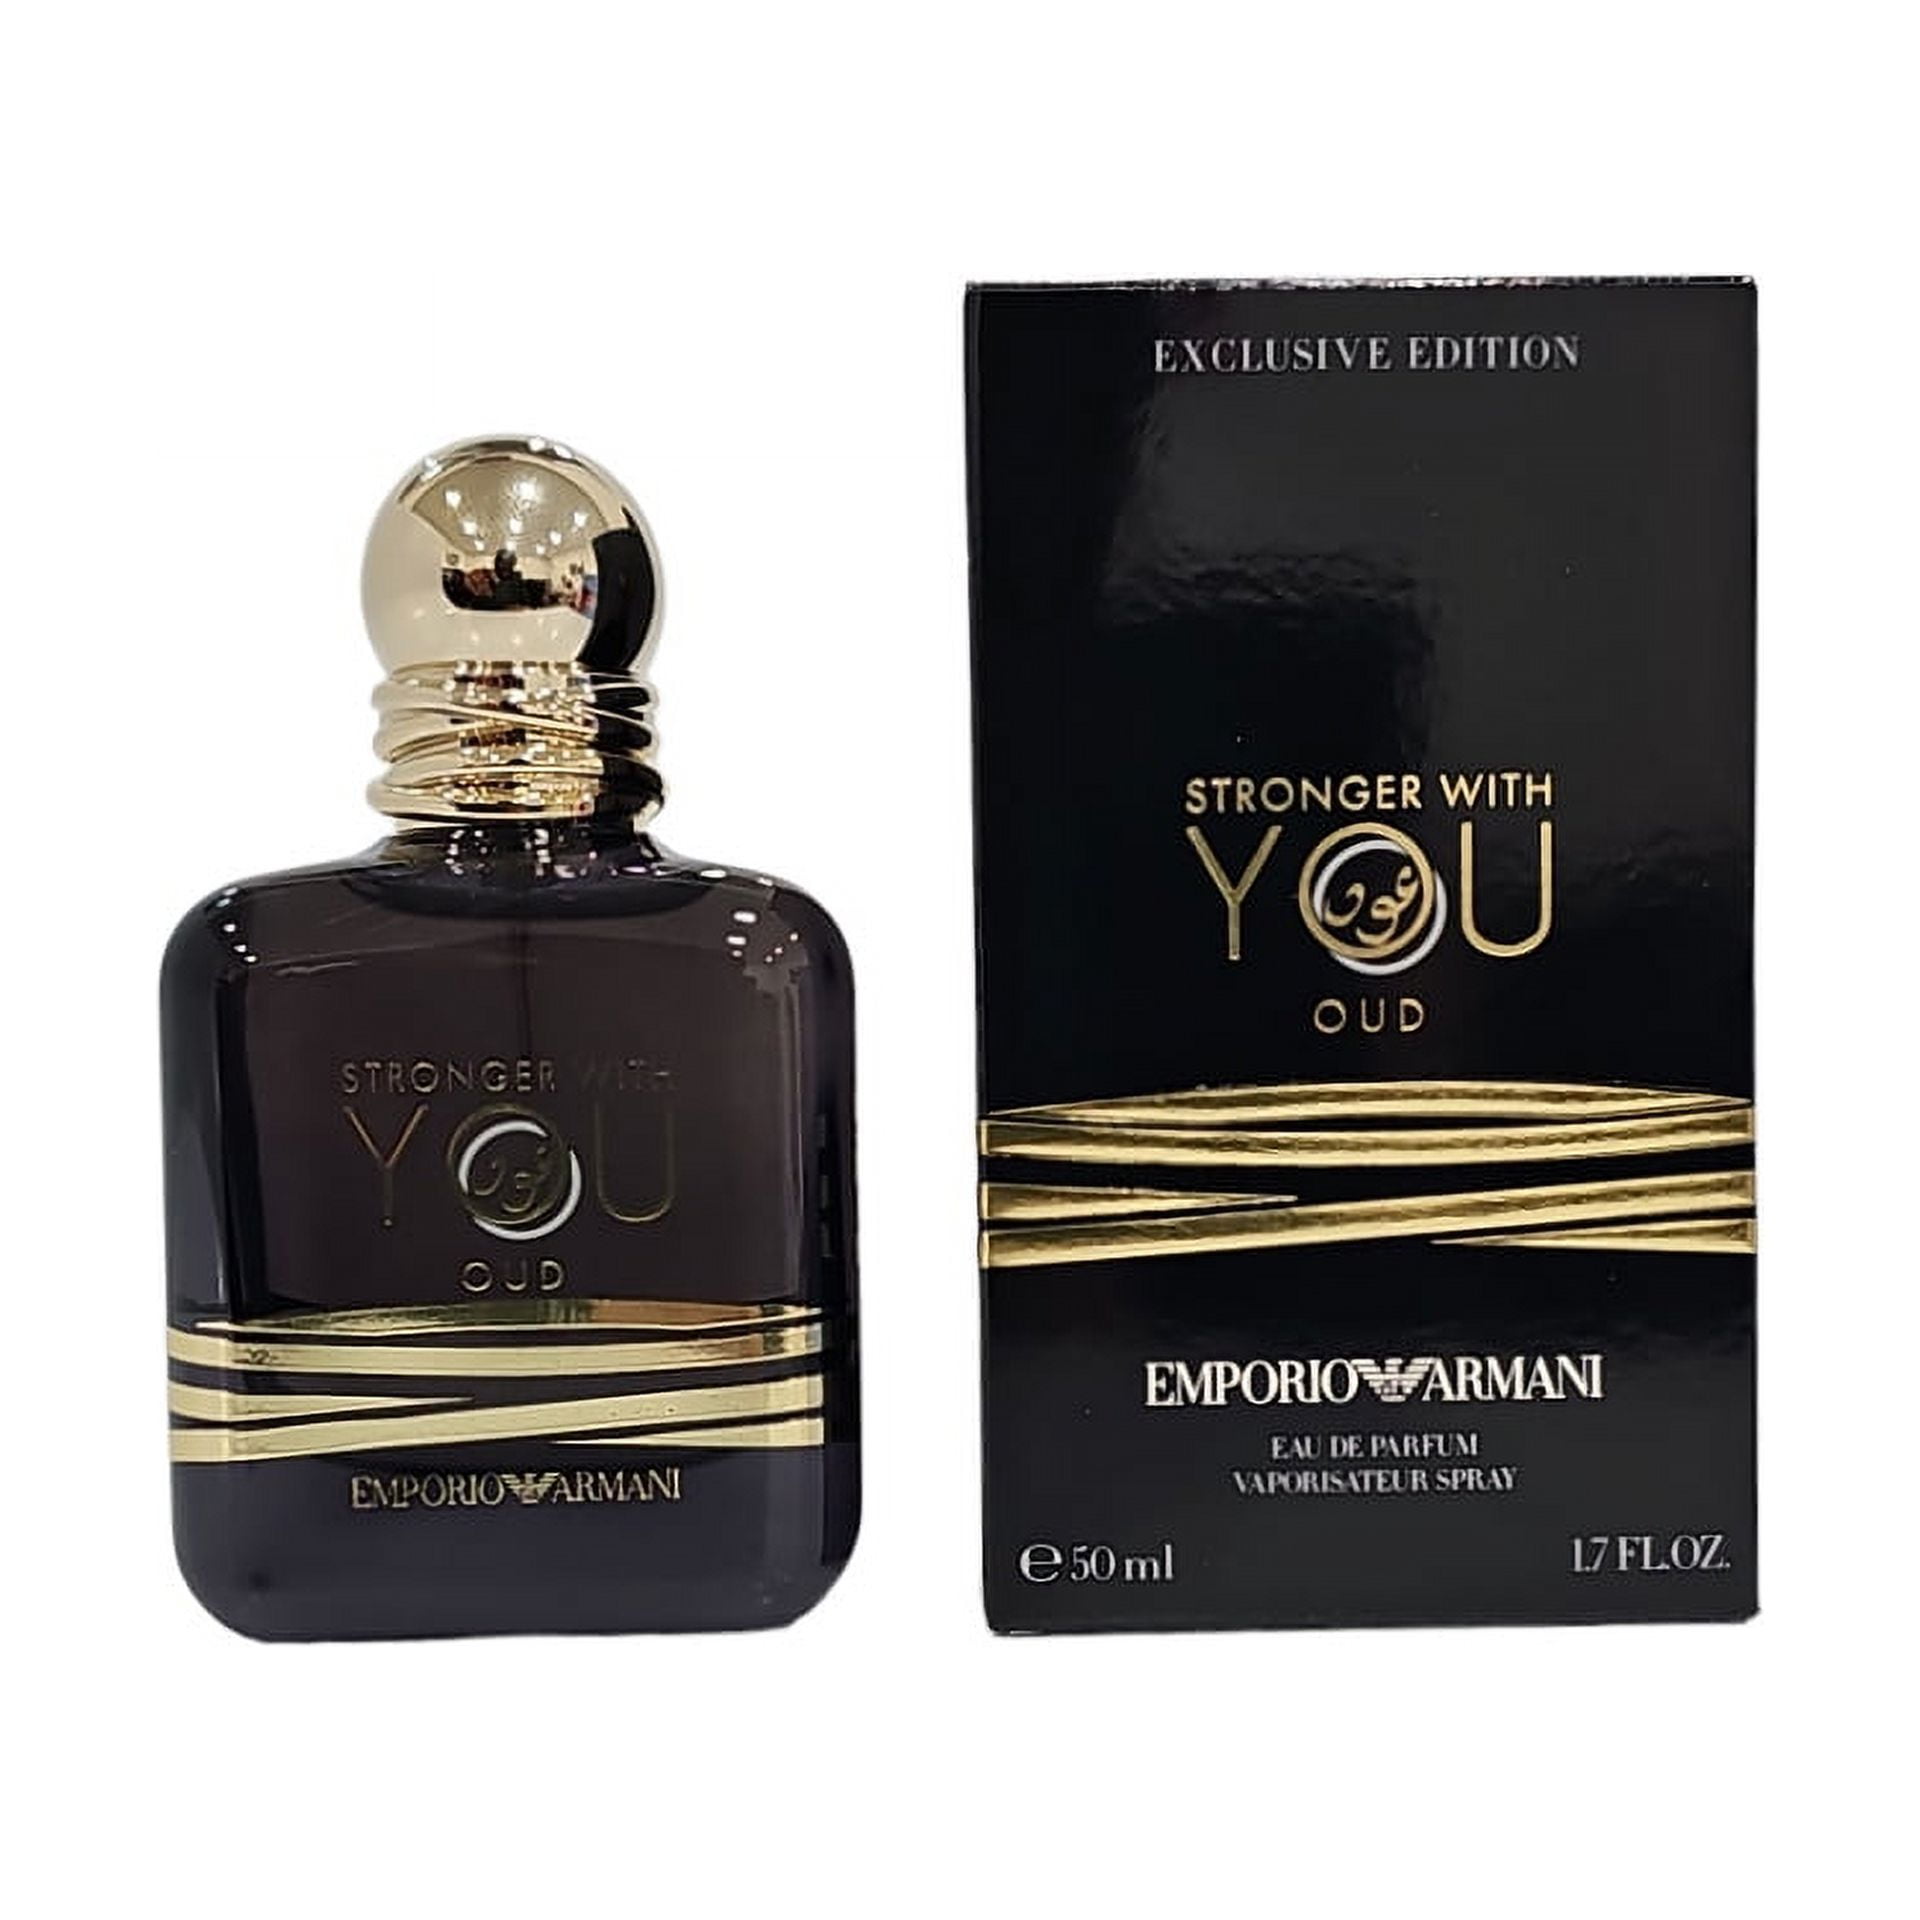 Buy Giorgio Armani Stronger with You Oud perfume sample - Decanted